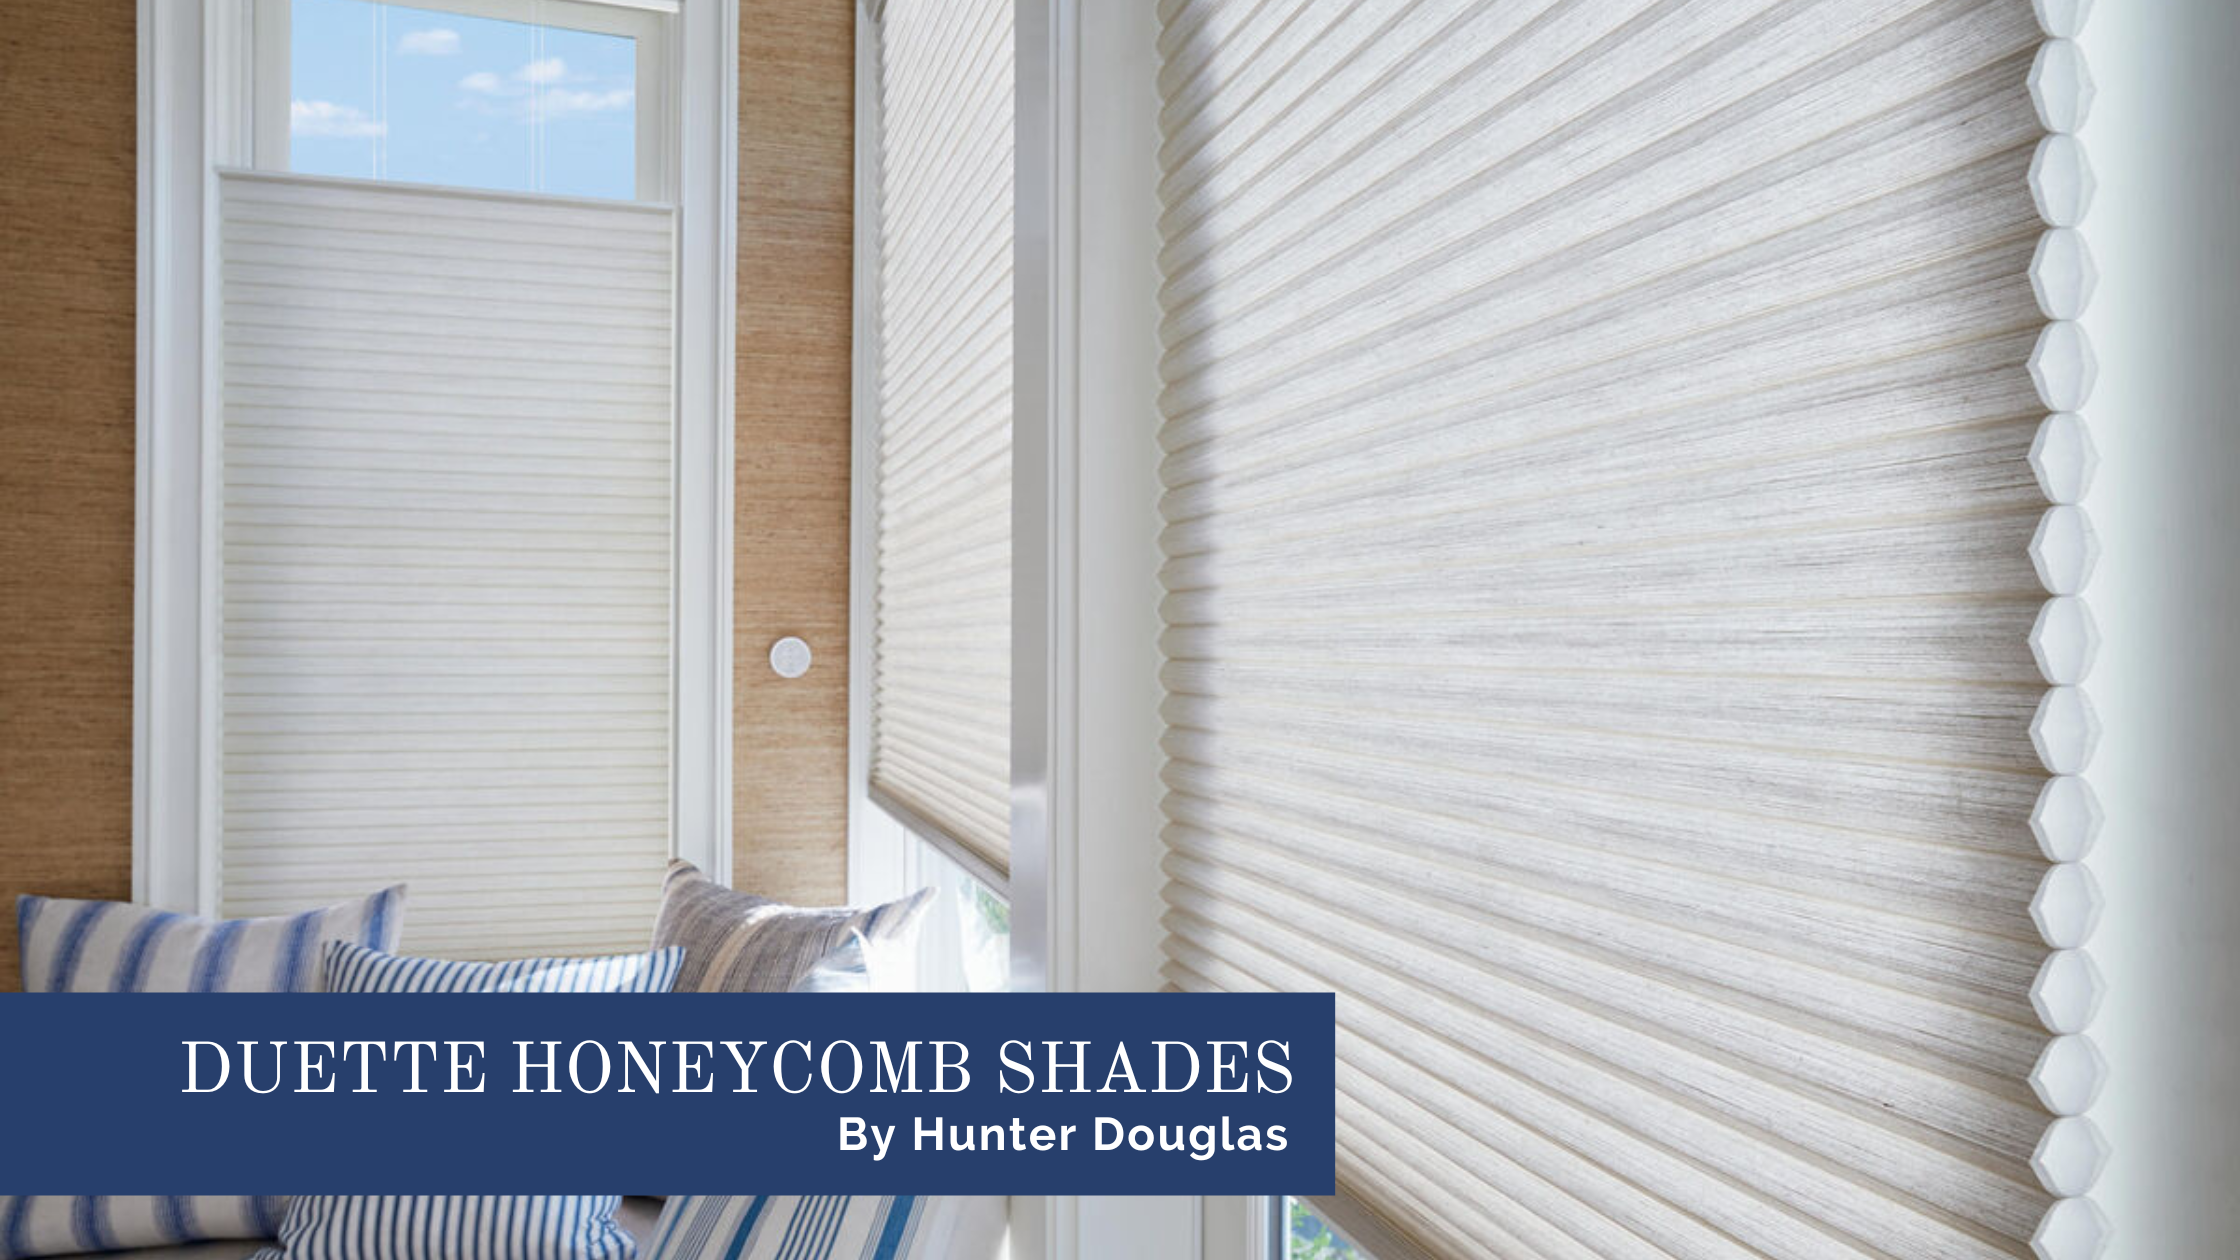 Hunter Douglas Duette Honeycomb Shades, responsible design, ethical design near Chicago, Illinois (IL)